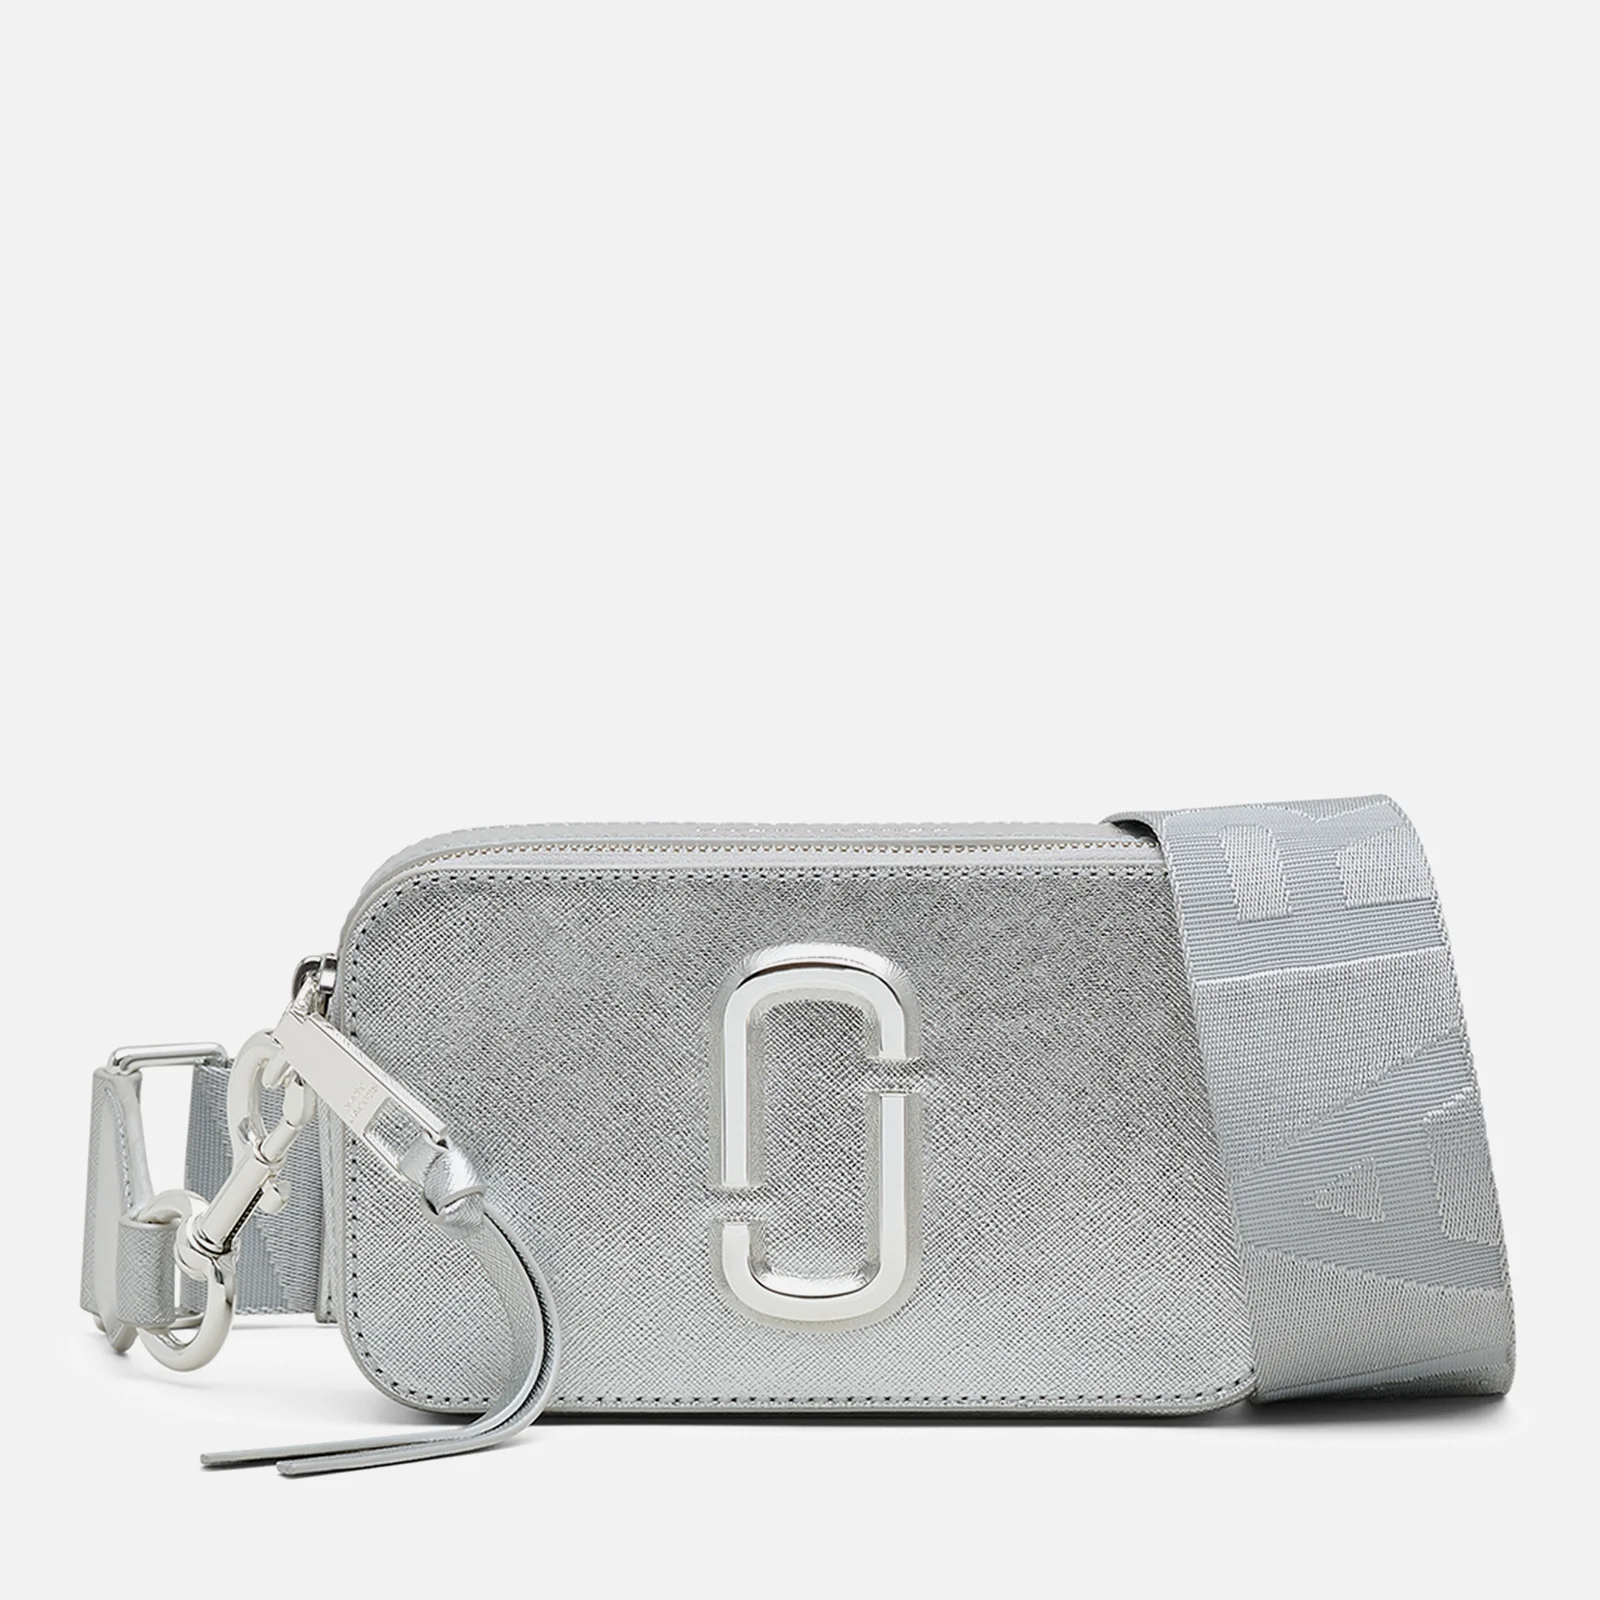 Marc Jacobs The DTM Metallic Snapshot Saffiano Leather Bag Image 1